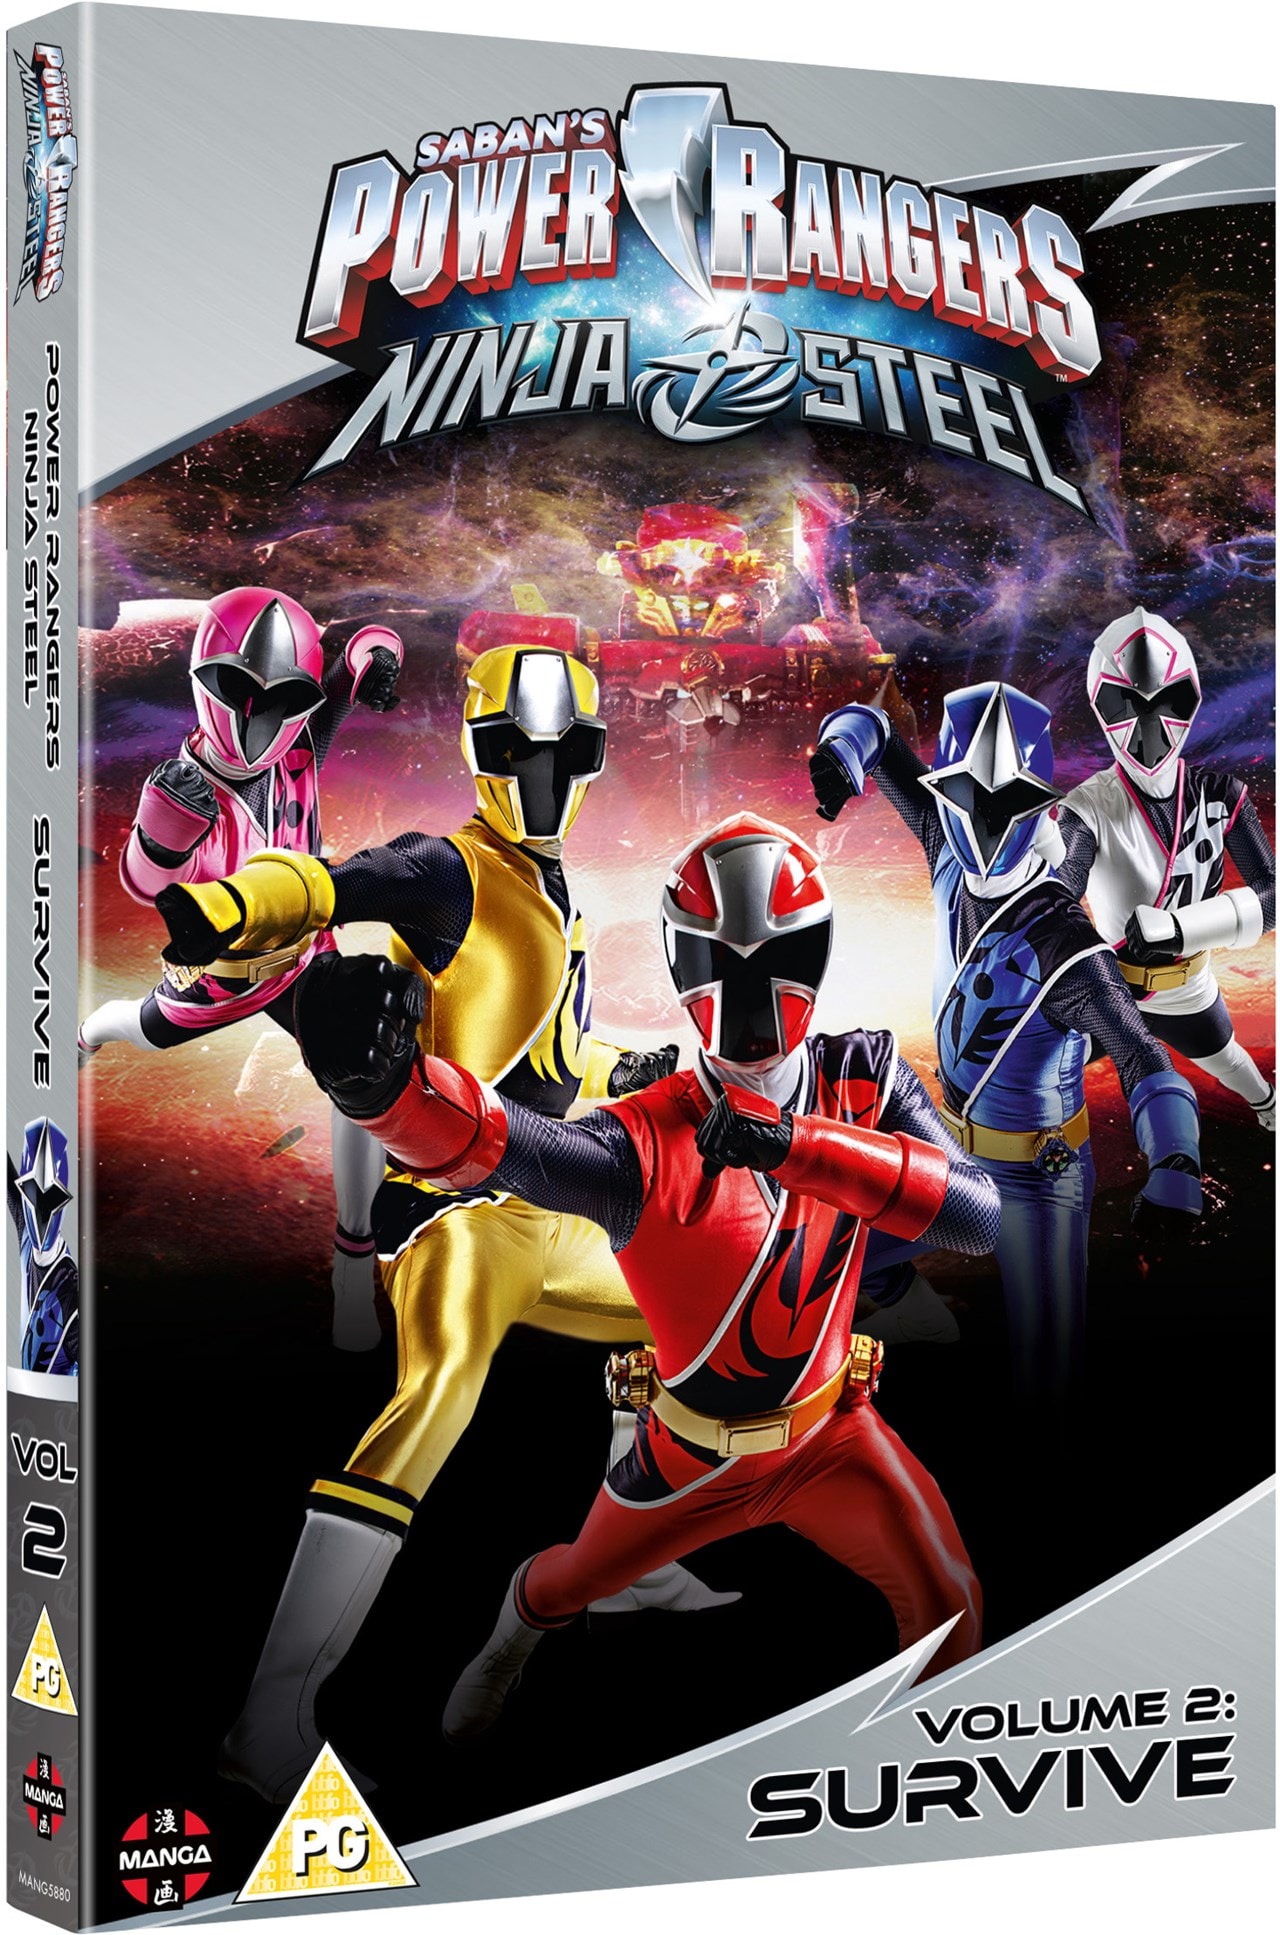 Power Rangers Ninja Steel Volume 2 Survive Dvd Free Shipping Over 20 Hmv Store